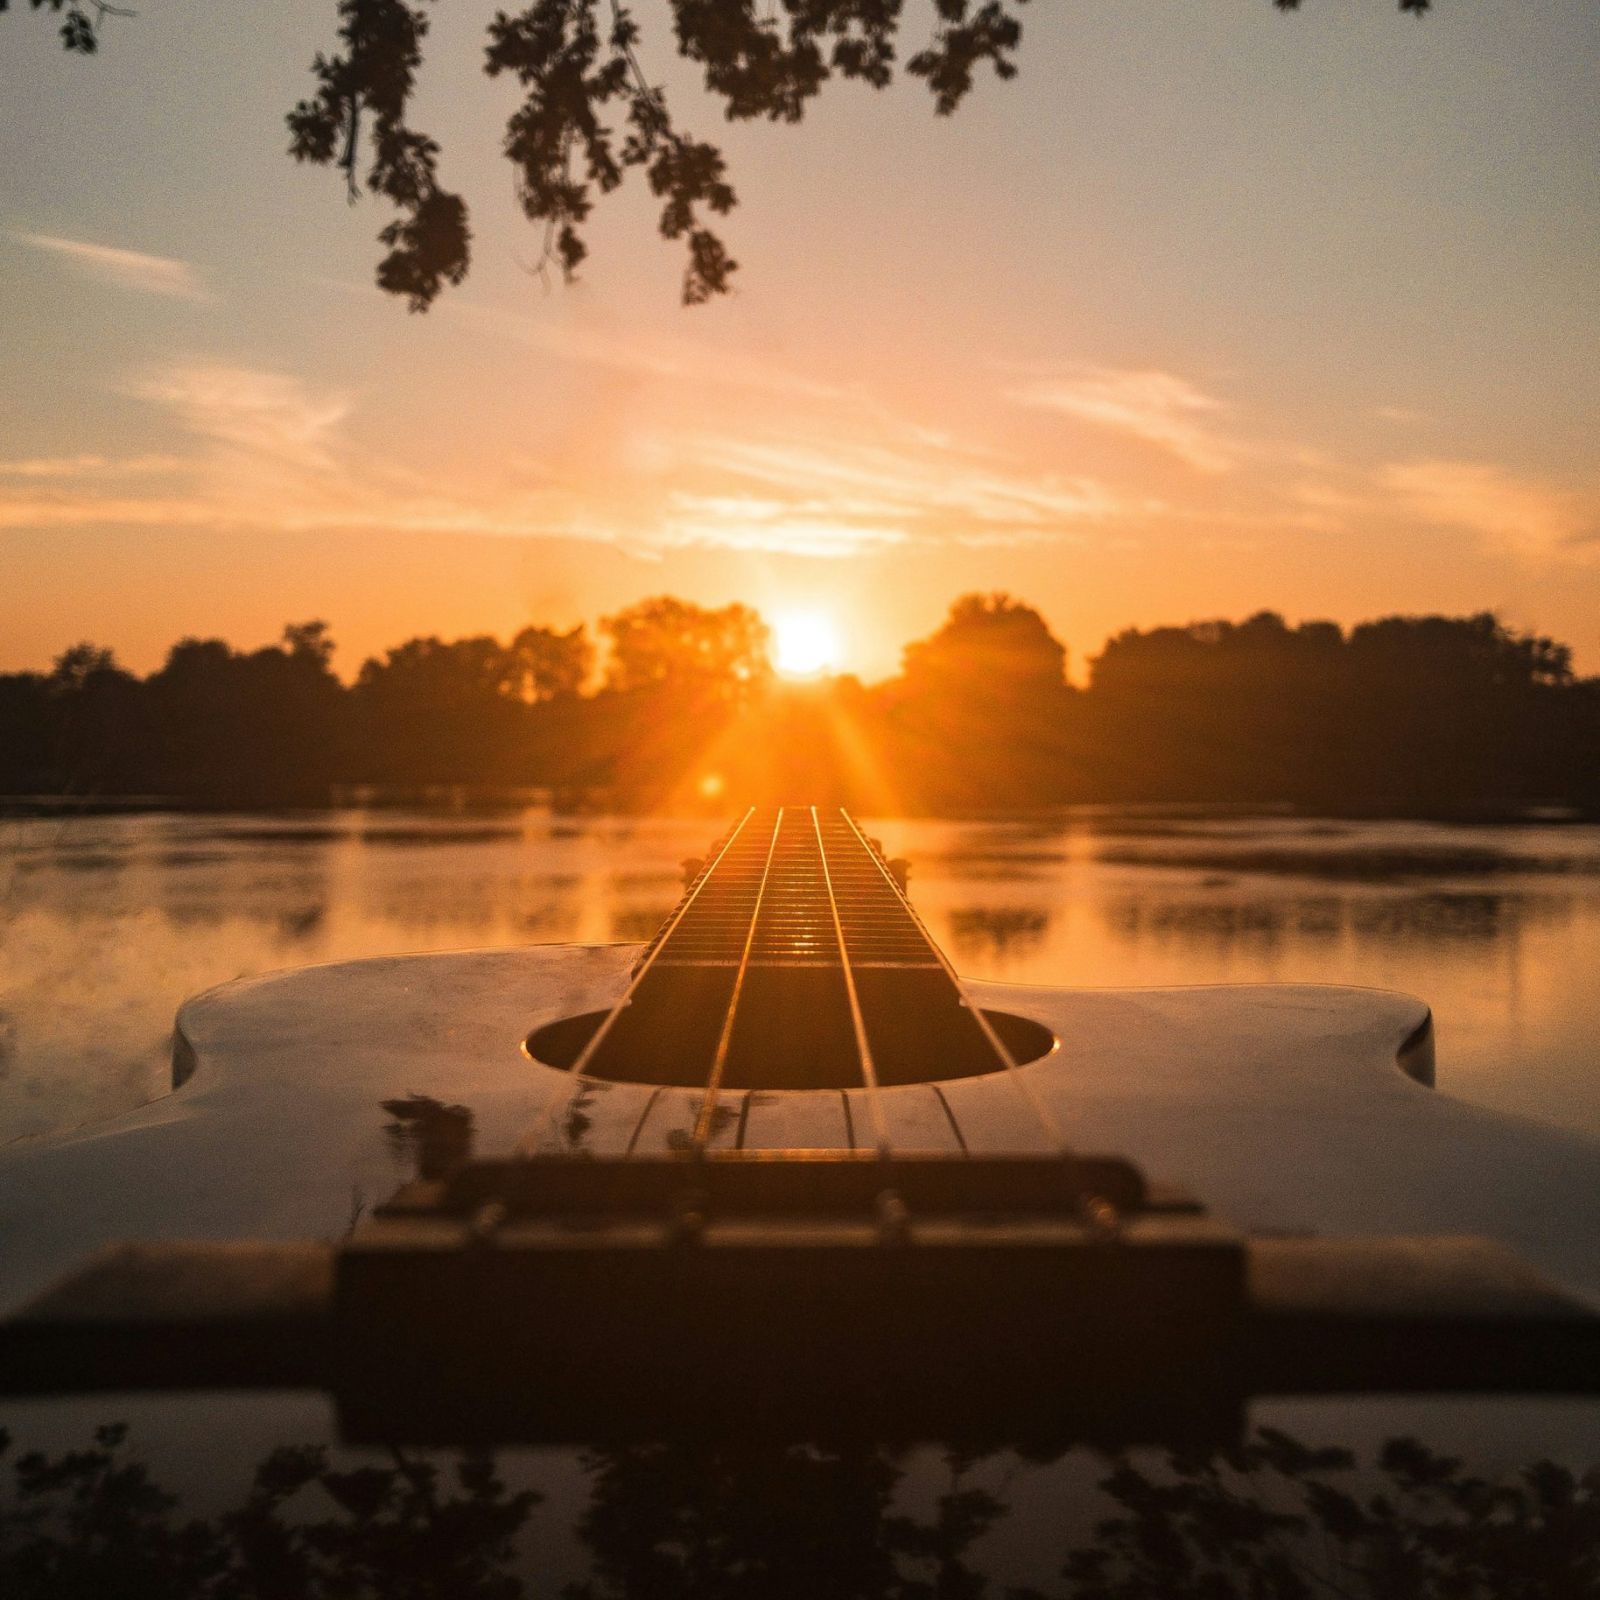 artistic shot of a bass guitar over looking a lake at sun set